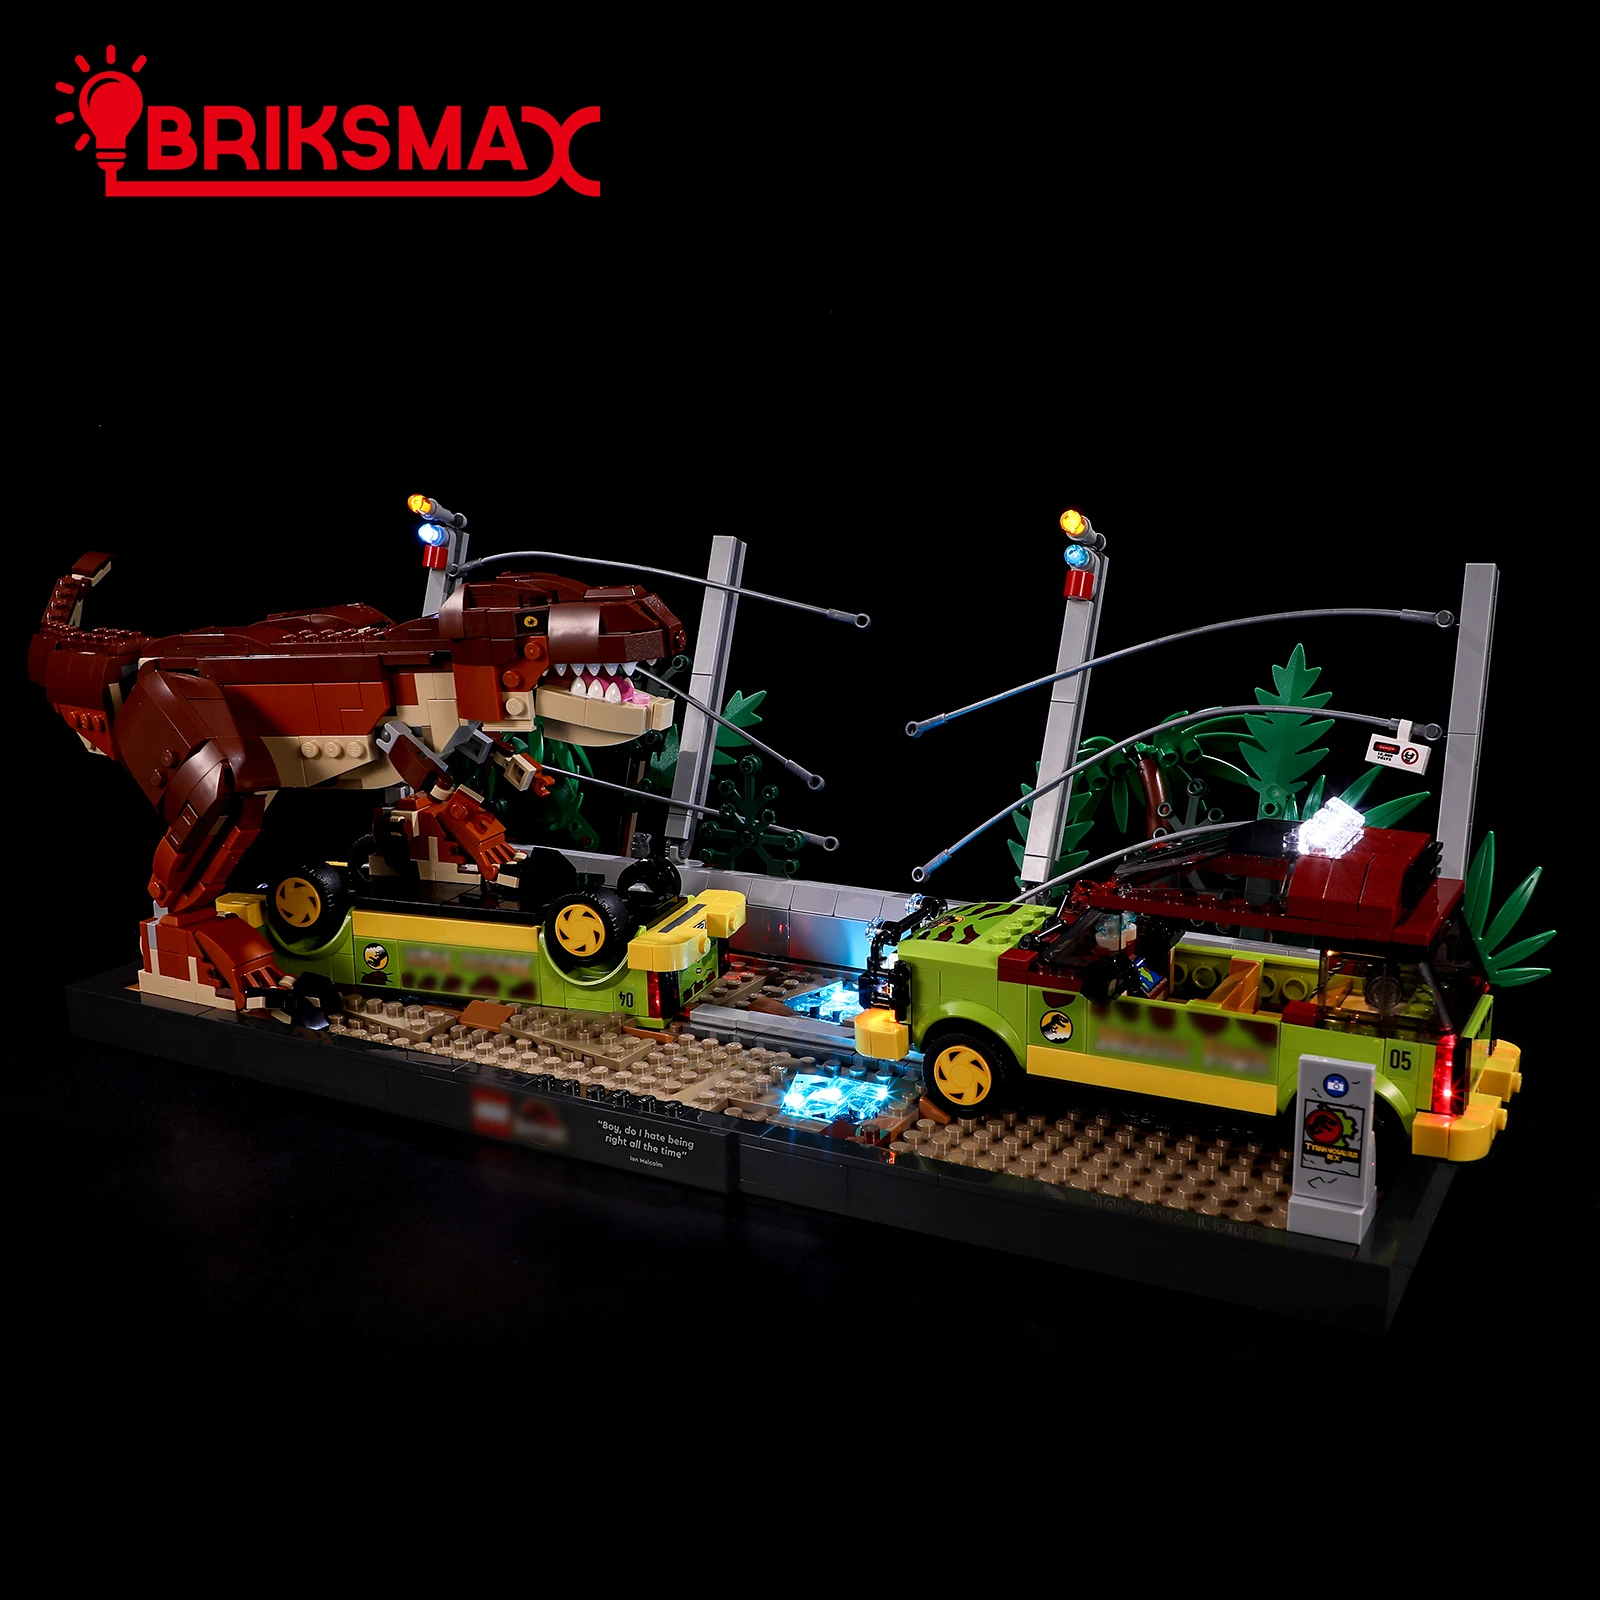 BriksMax LED Light Kit for 76956 T. rex Breakout Building Blocks Set (NOT Include the Model) Toys for Children